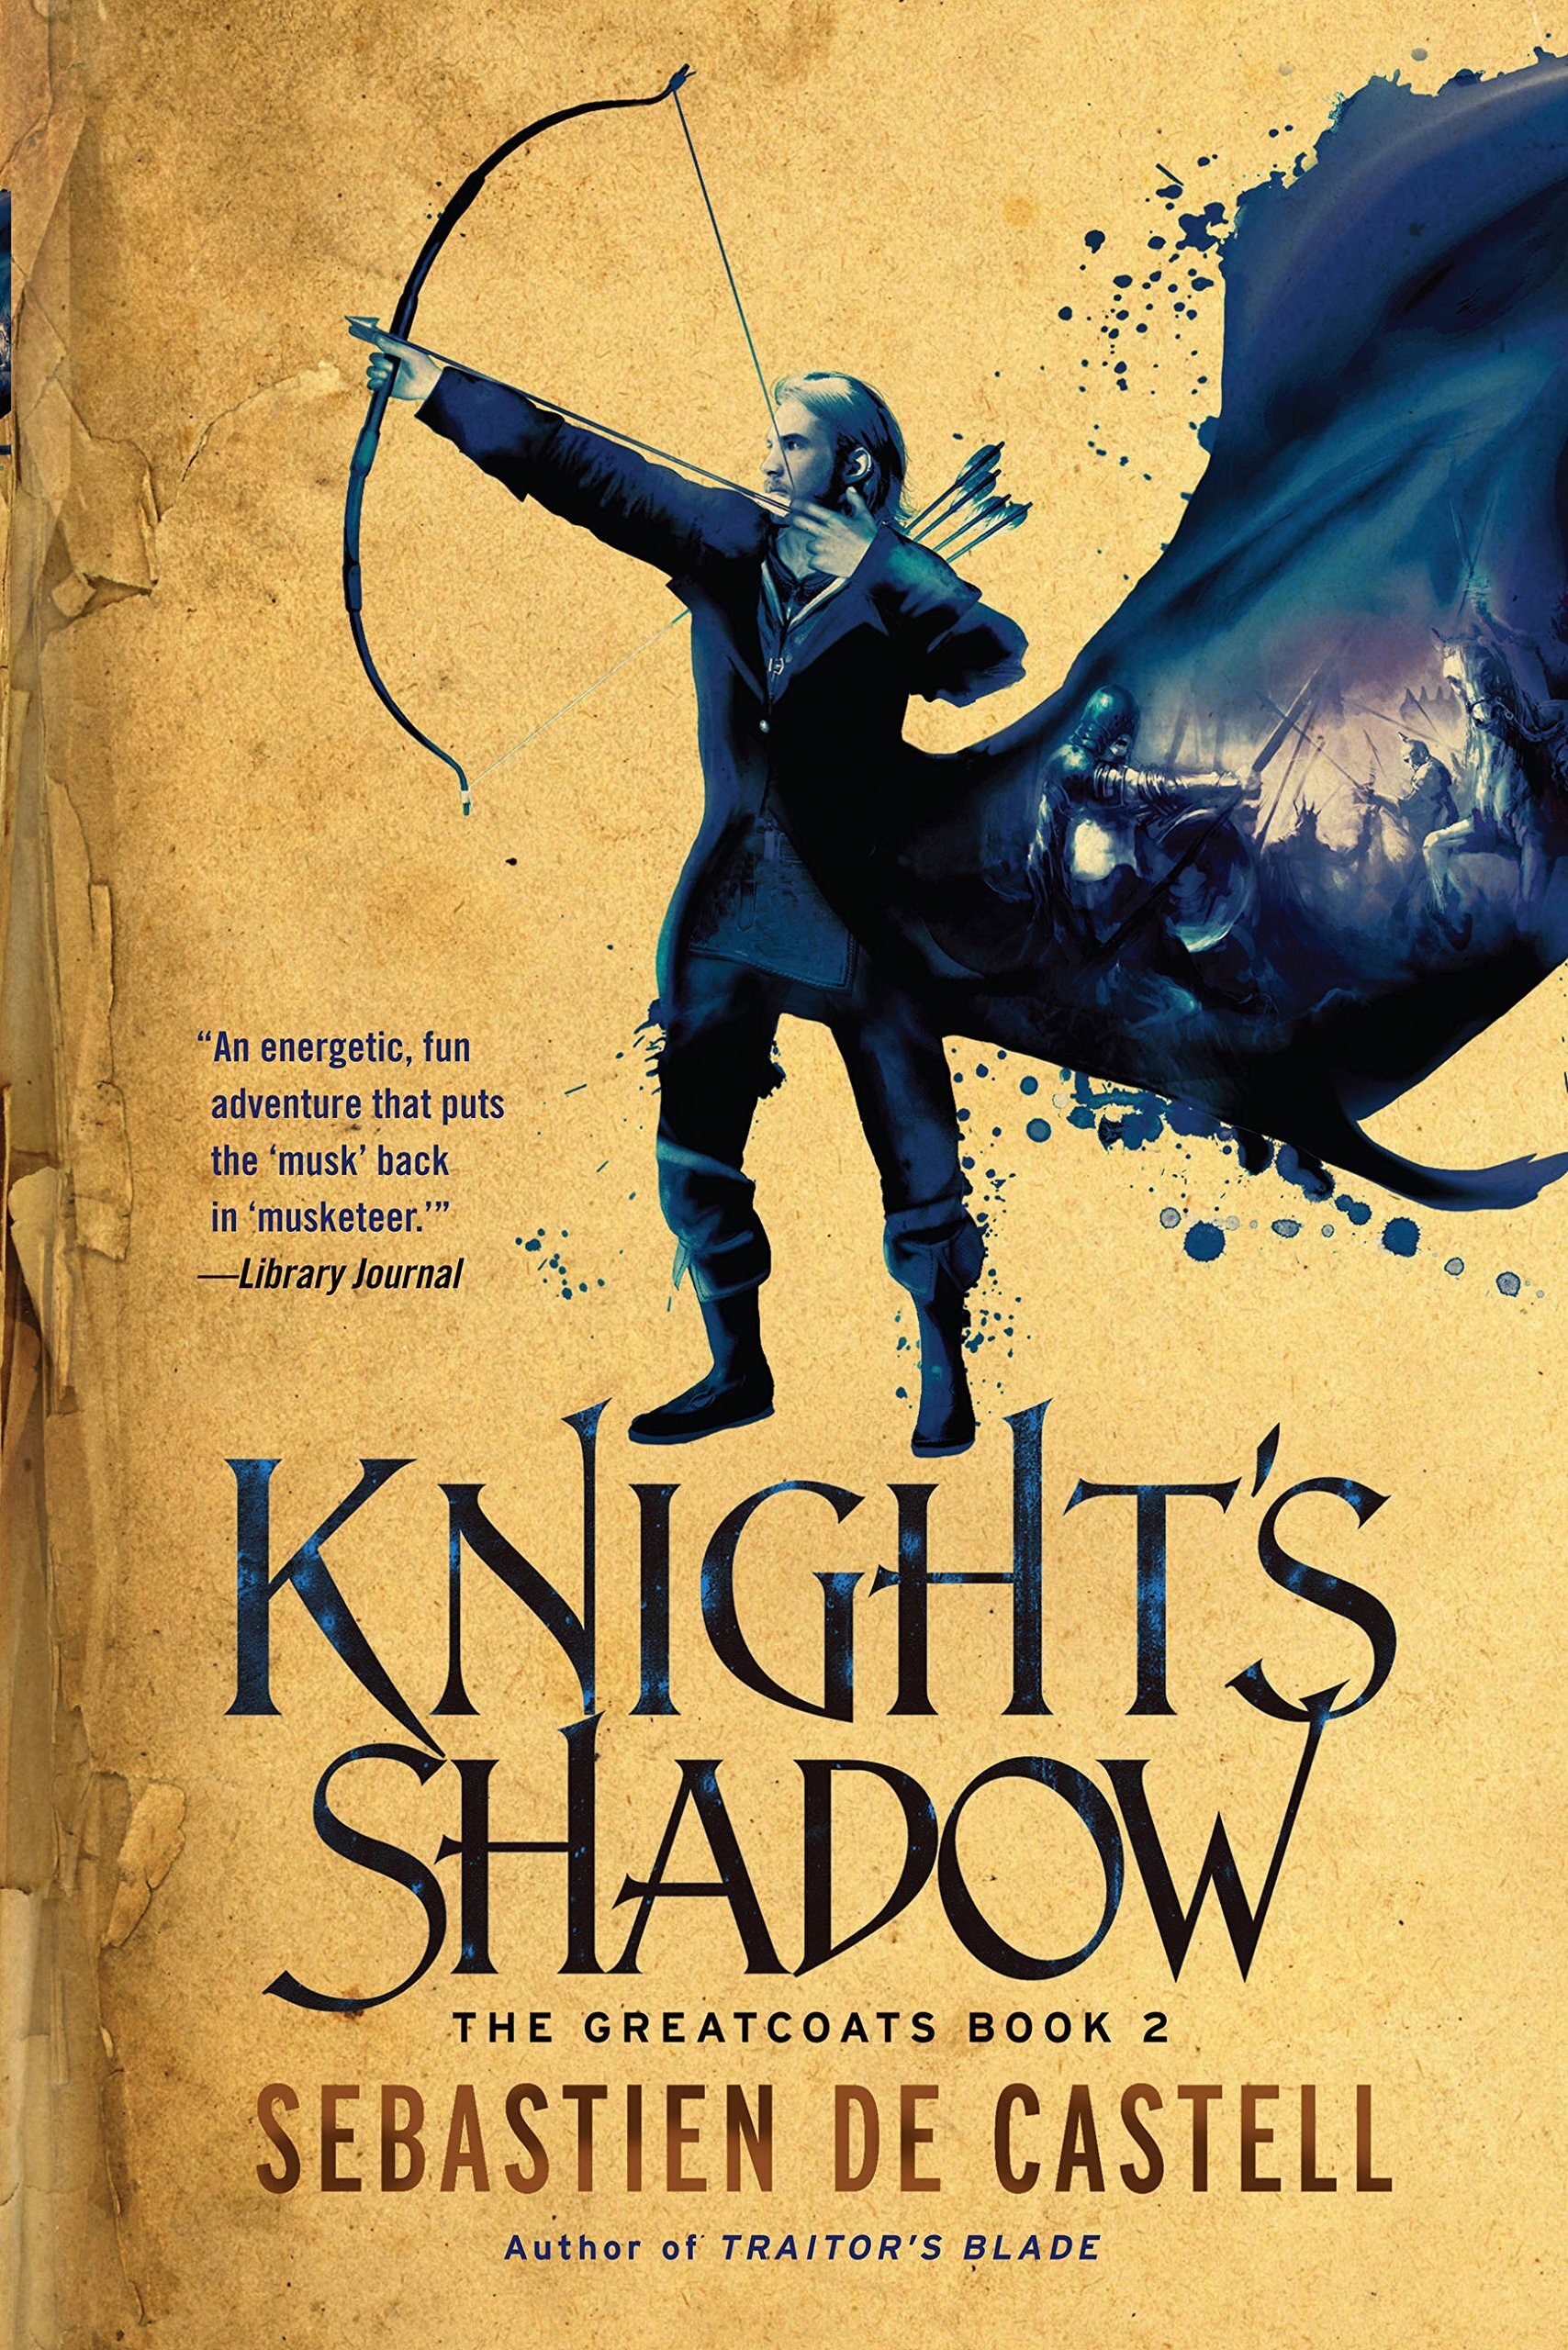 Knights shadow.jpg